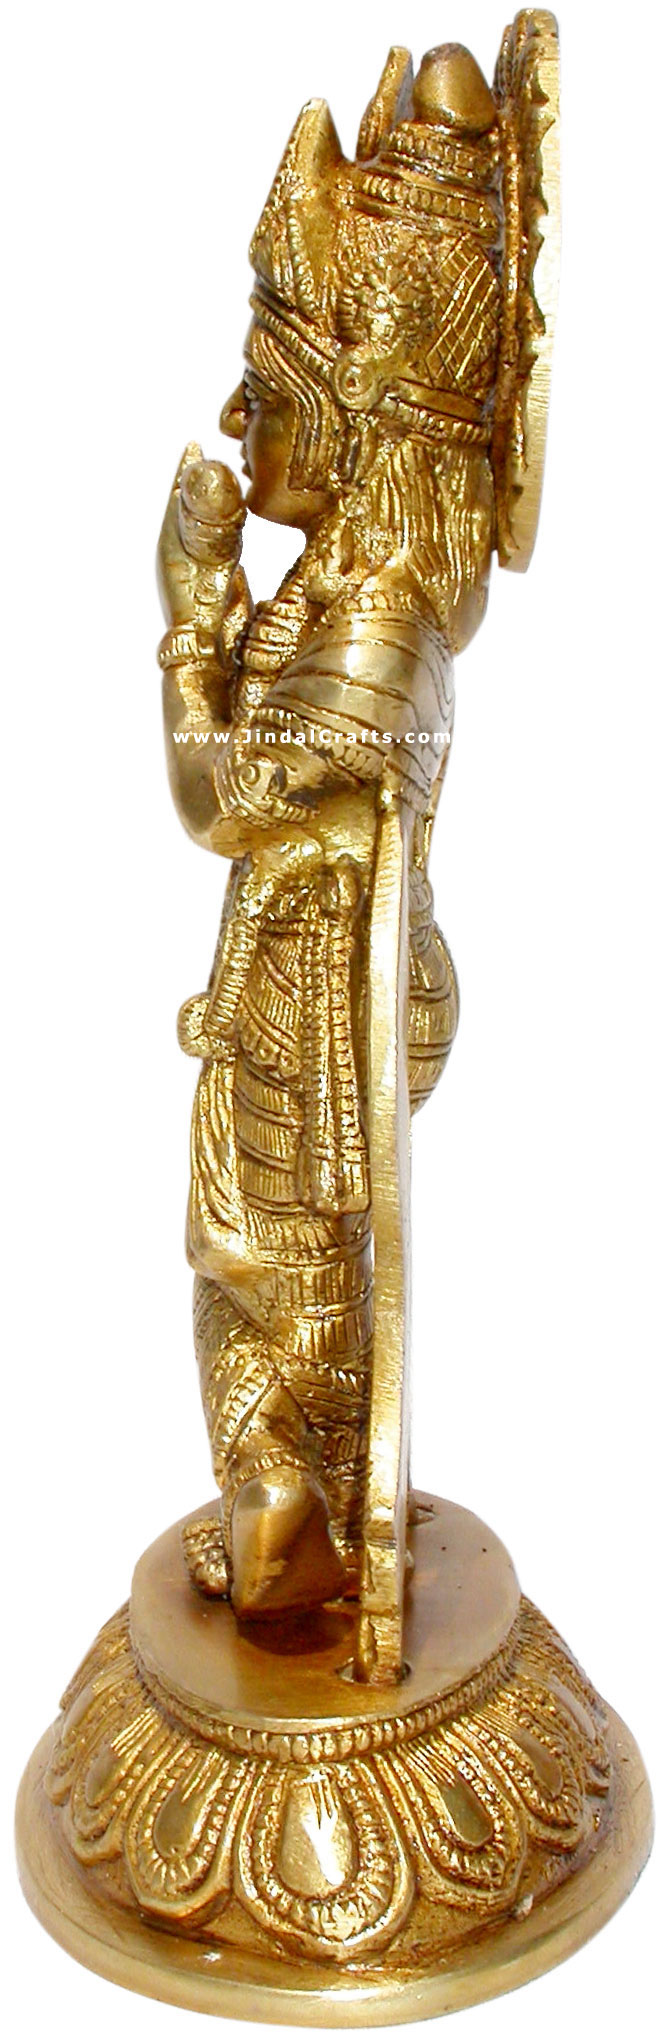 Lord Krishana Indian God Statue Religious Handicraft Art Idol Statue Handicrafts